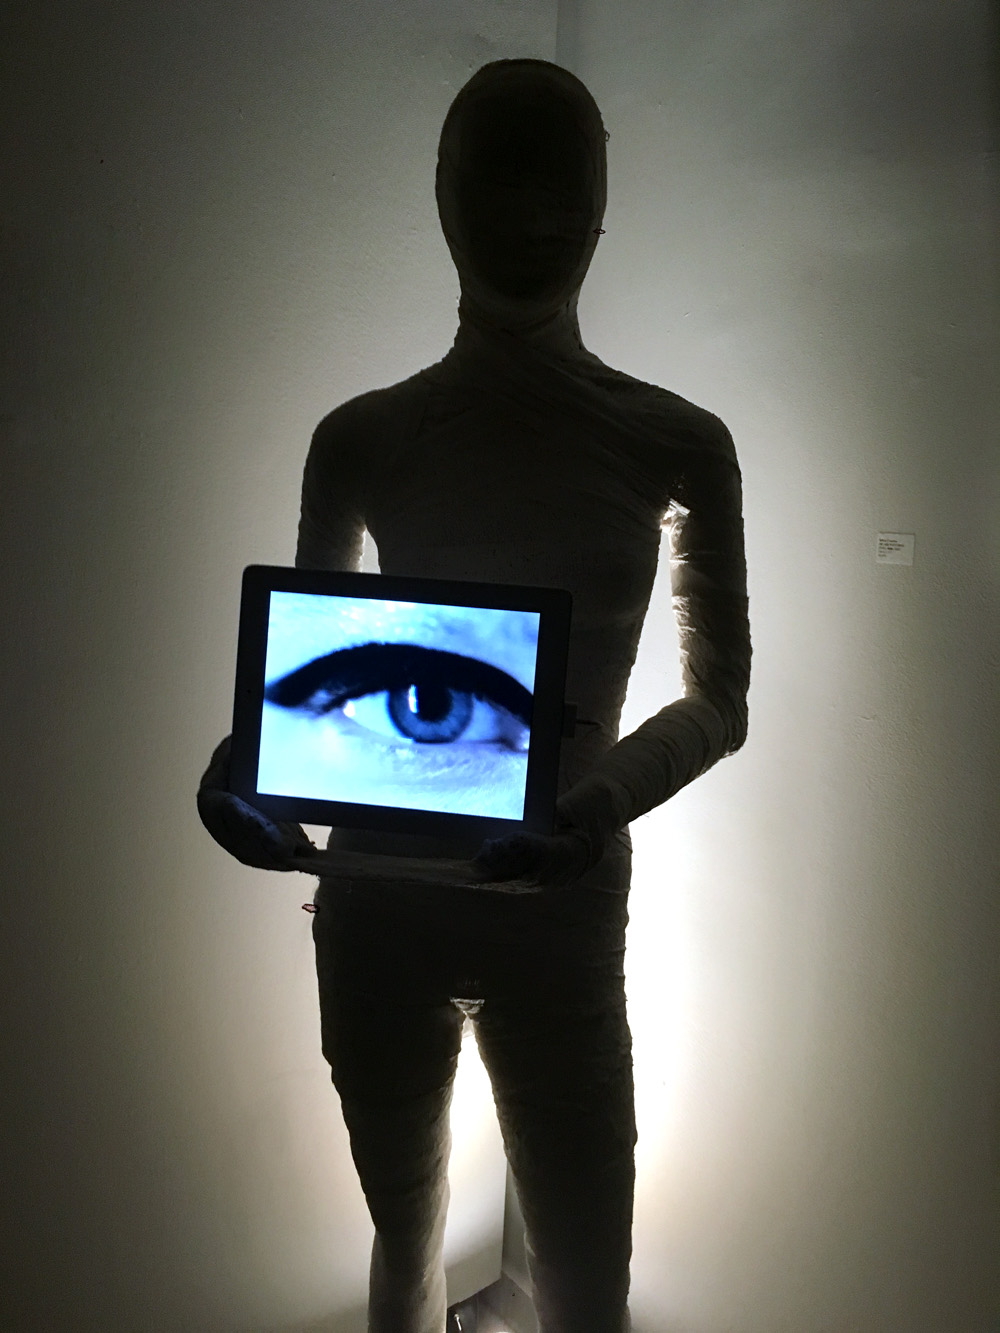 We-Are-Watching-You-Sculpture-Video-Art-Artist-Indira-Cesarine-1lr.jpg